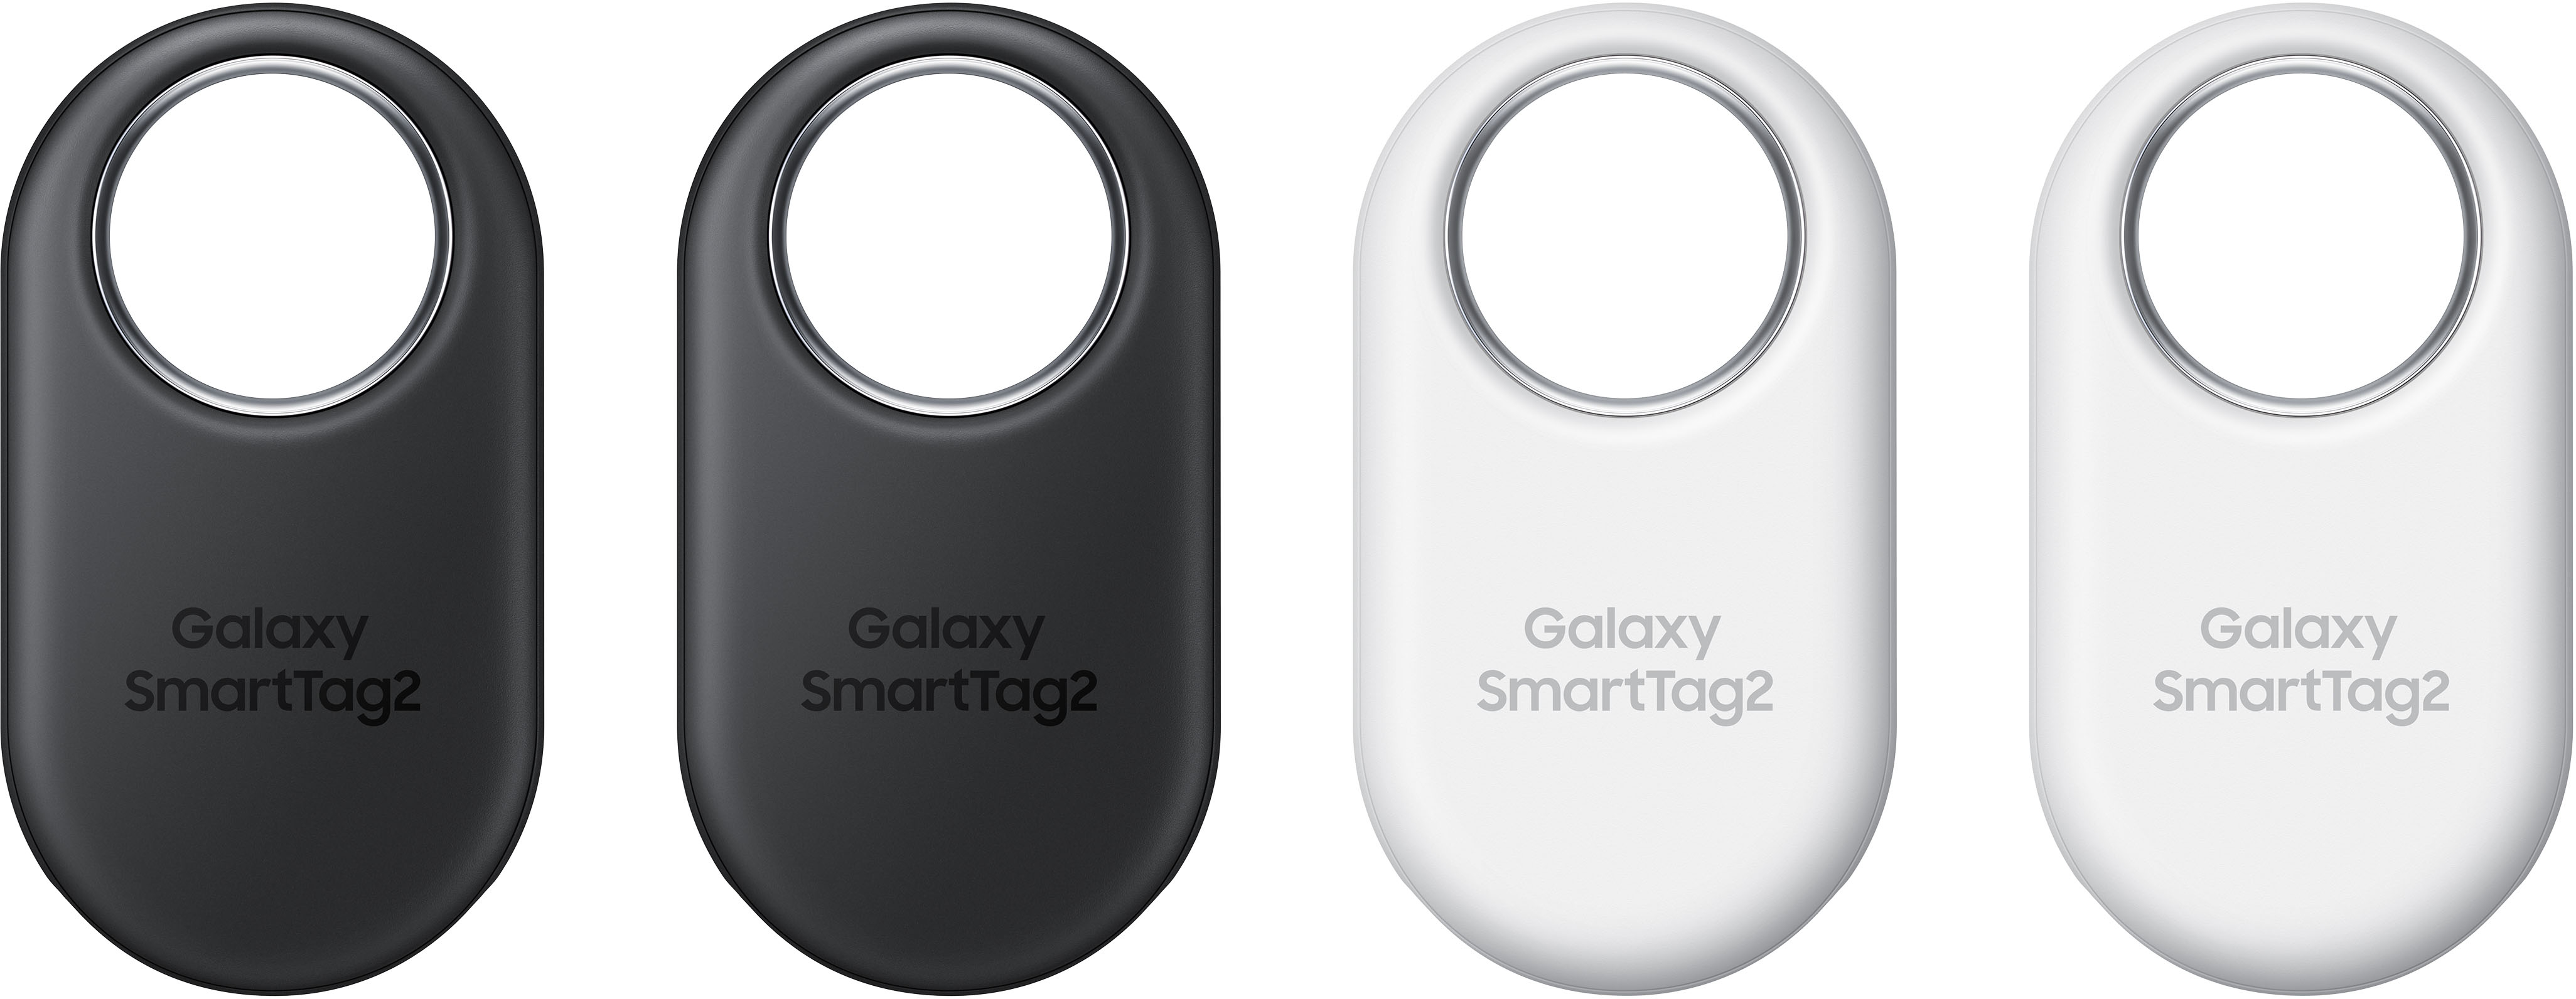 Photos - GPS Tracker Samsung  Galaxy SmartTag2 - Black and White EI-T5600KWEGUS 